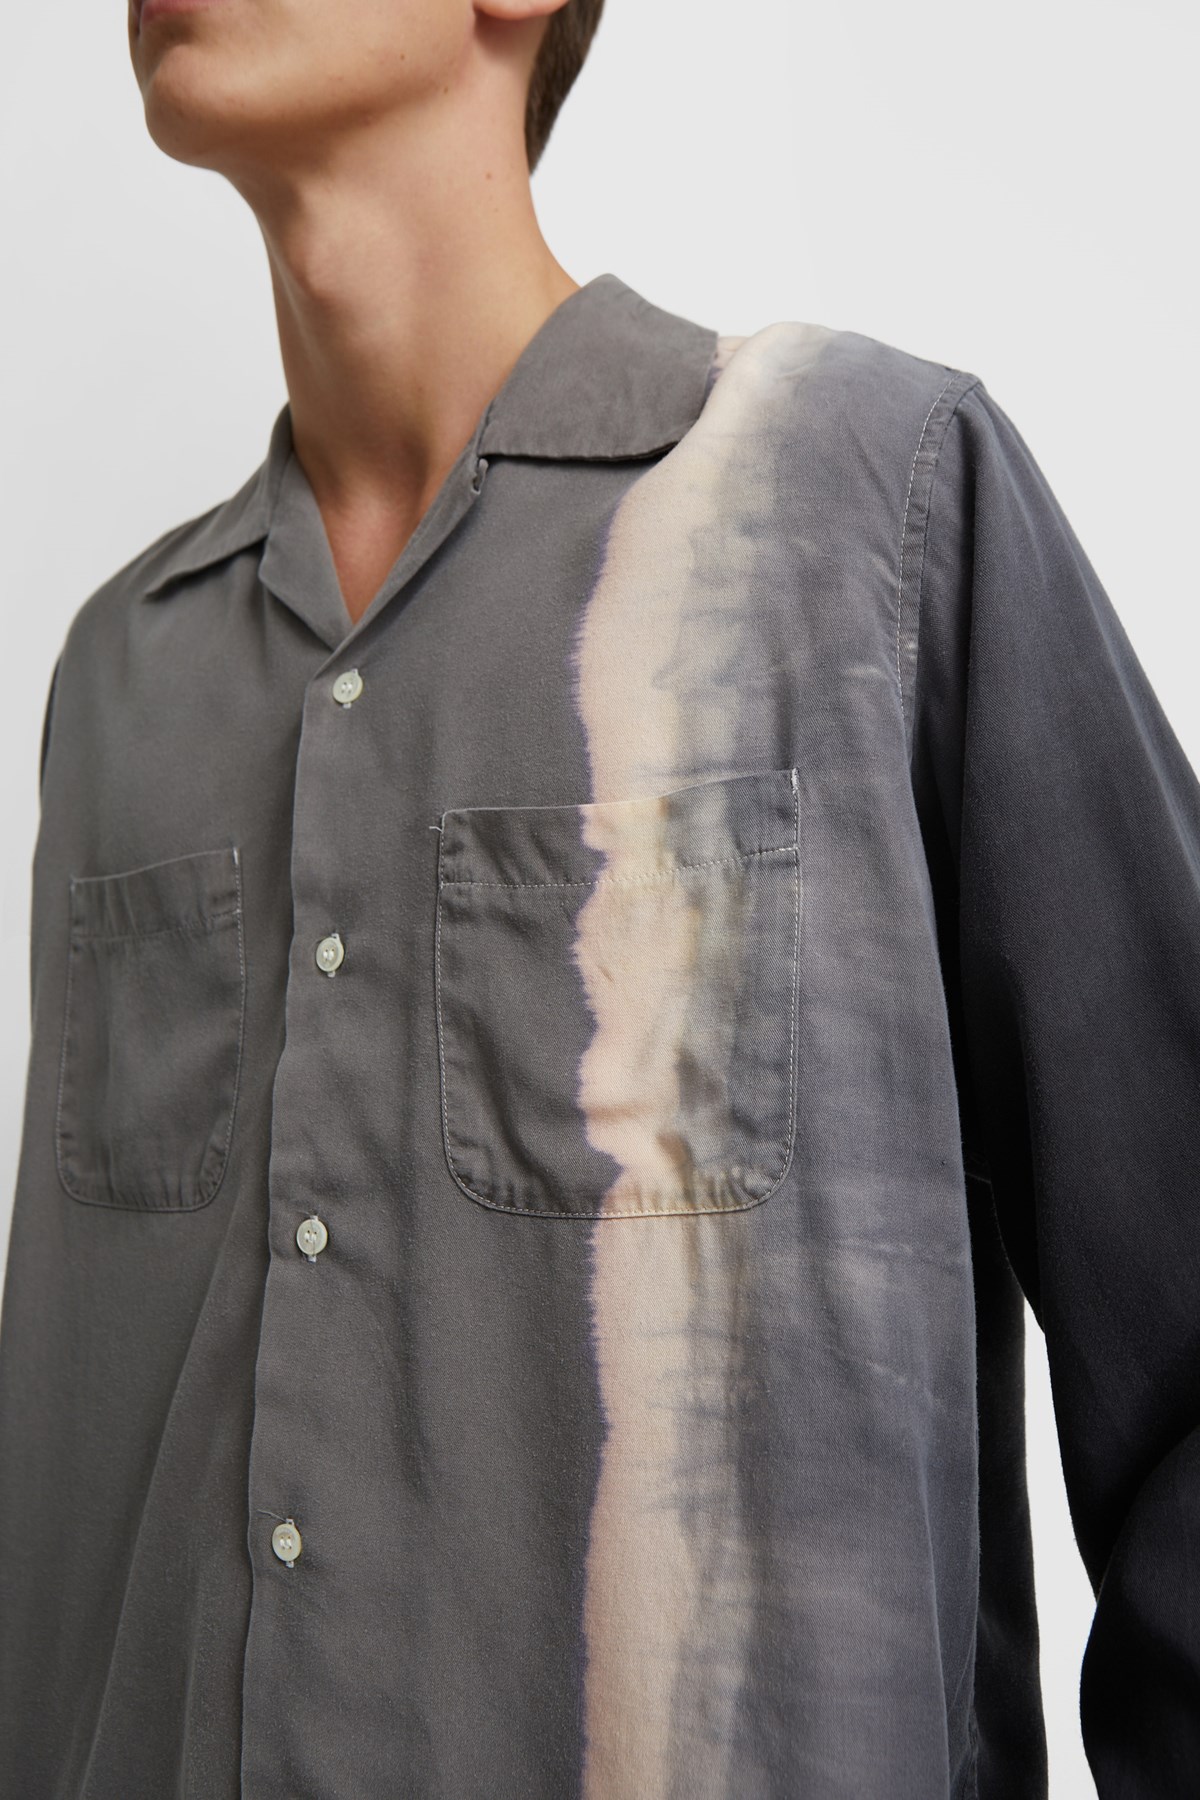 NOMA t.d. Hand Dye Shirt Gray - Black | WoodWood.com